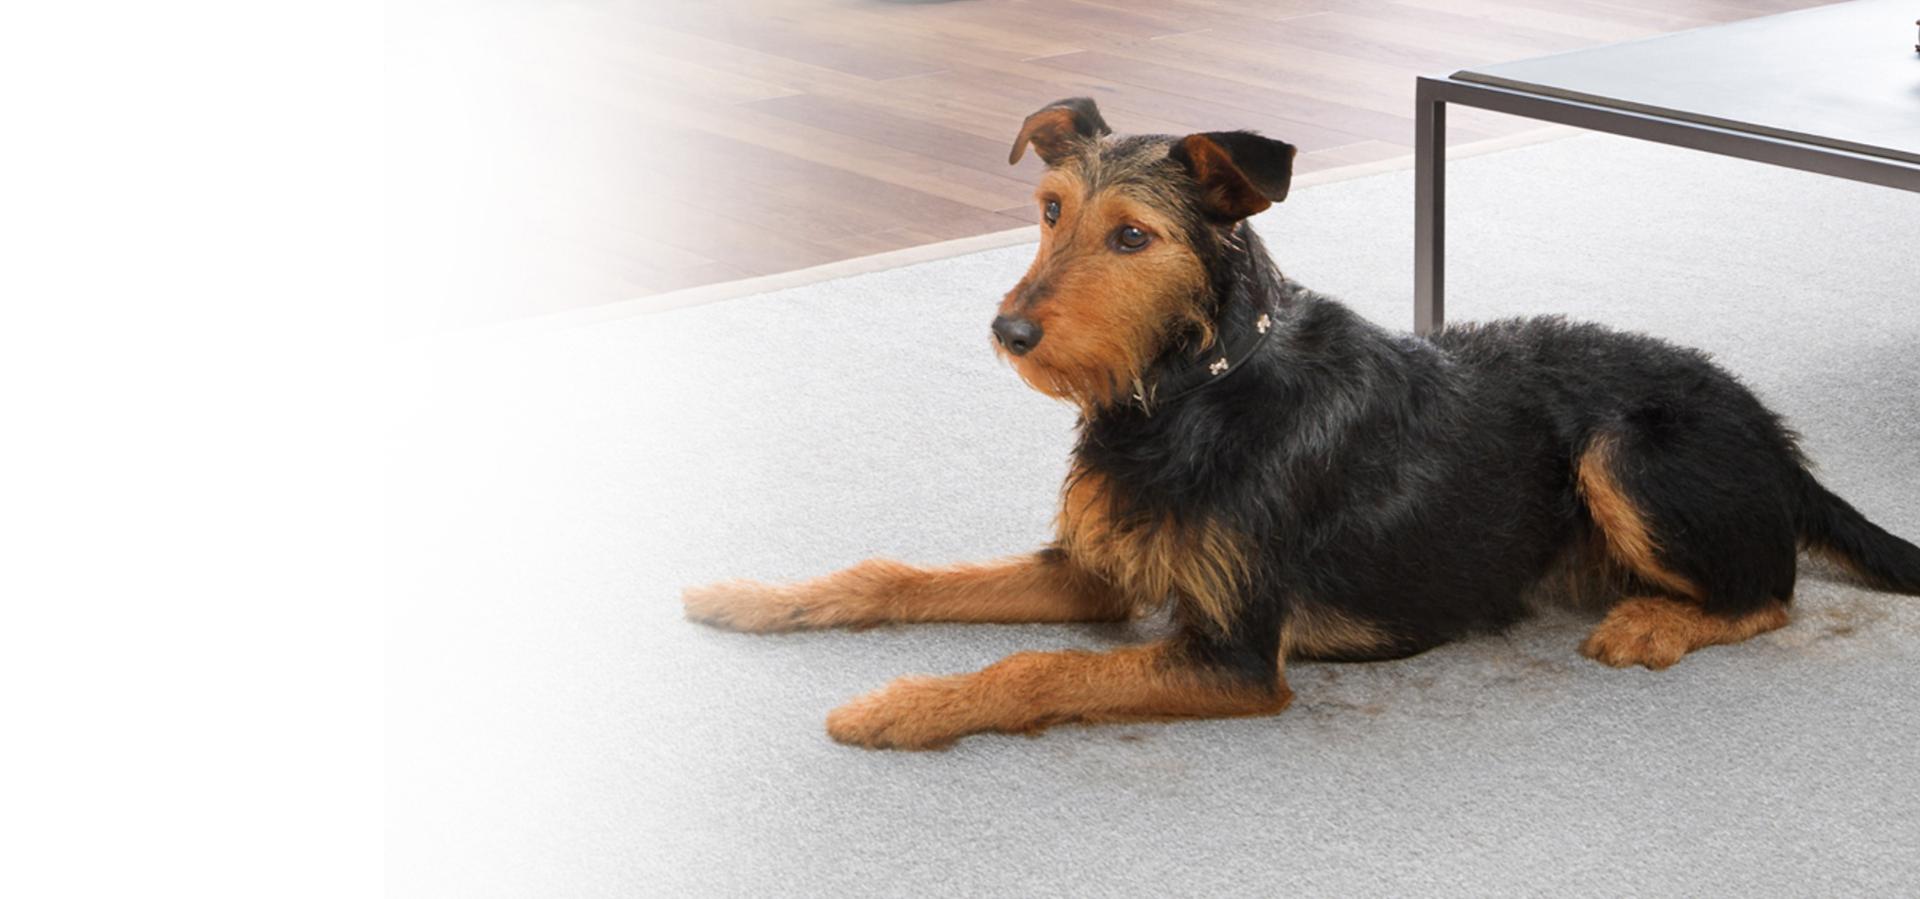 A dog lying on a living room rug.